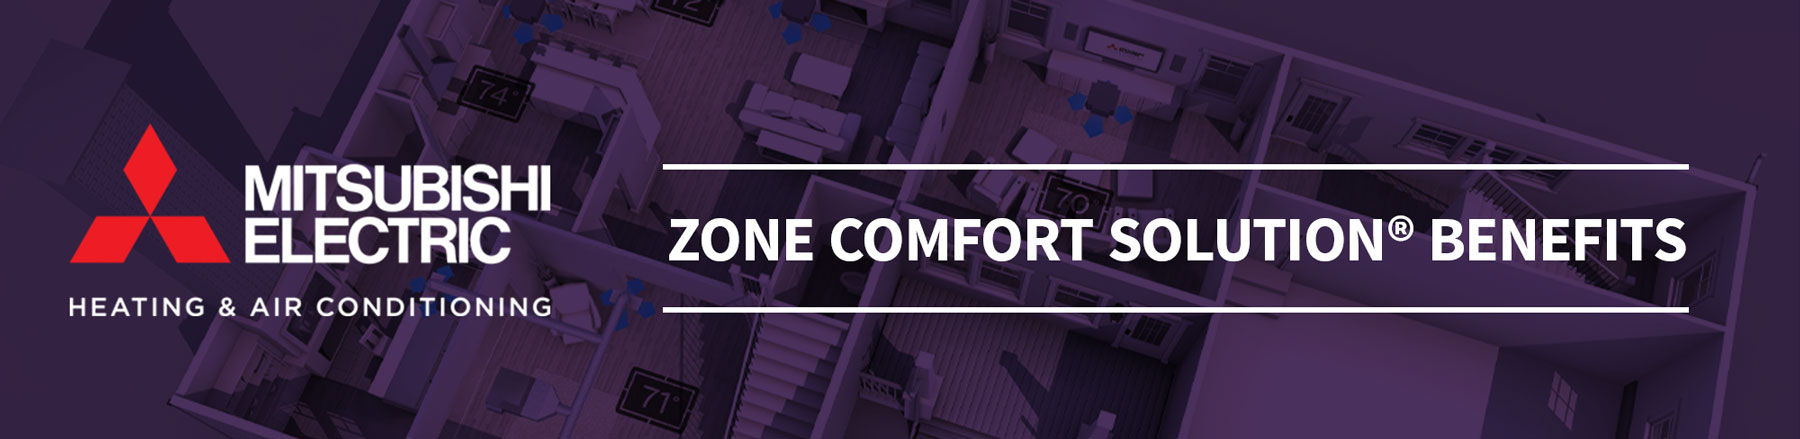 Mitsubishi Electric Zone Comfort Solution